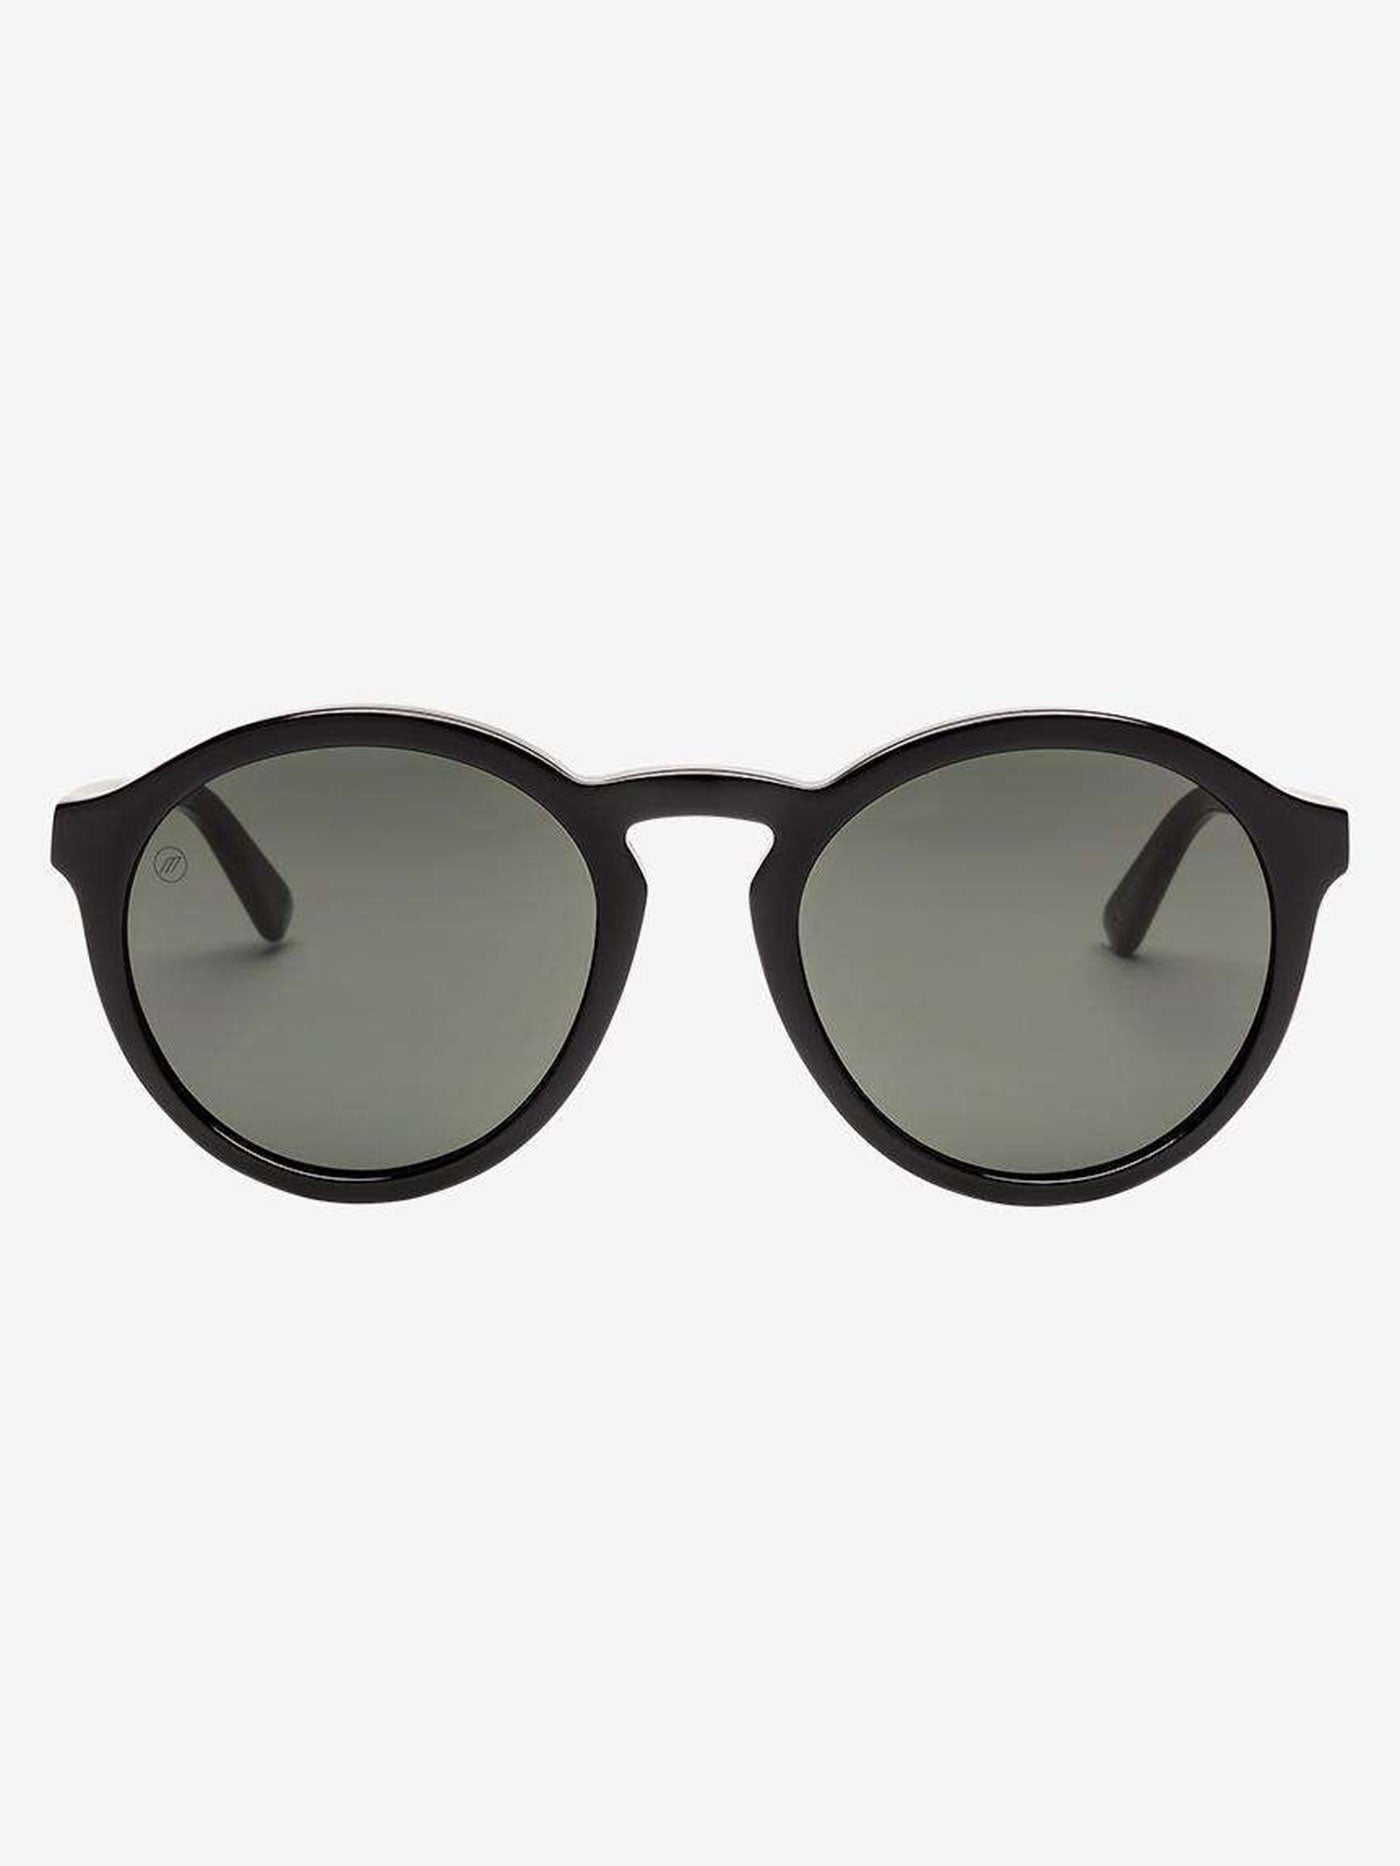 Electric Moon Gloss Black/Grey Sunglasses